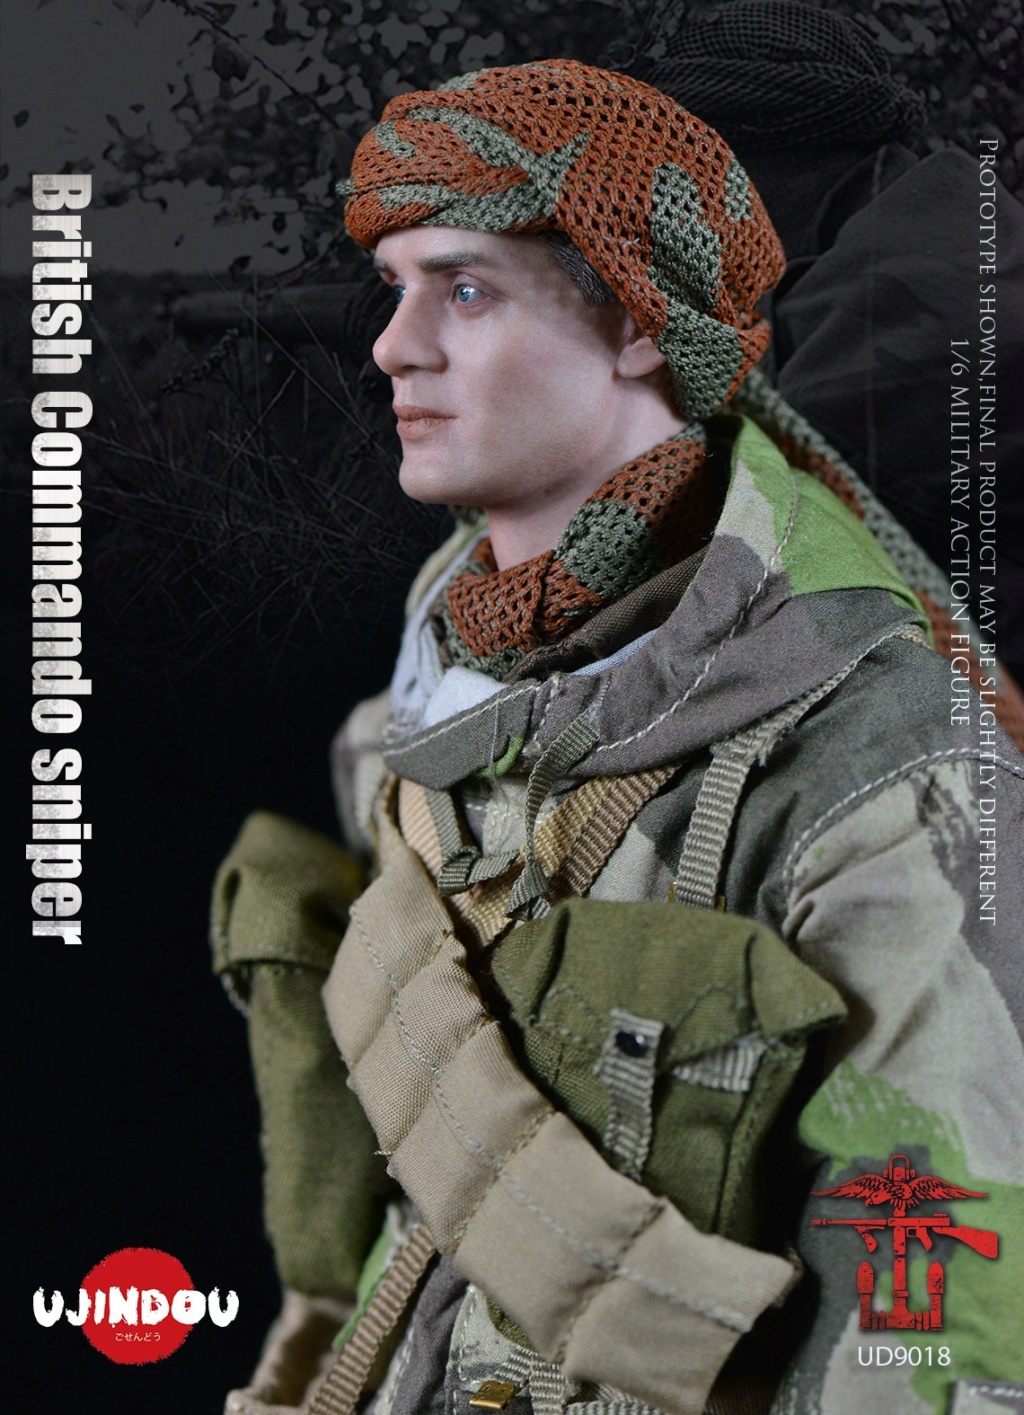 Historical - NEW PRODUCT: UJINDOU: UD9018 1/6 Scale WWII British Commando Sniper 1944 13492112